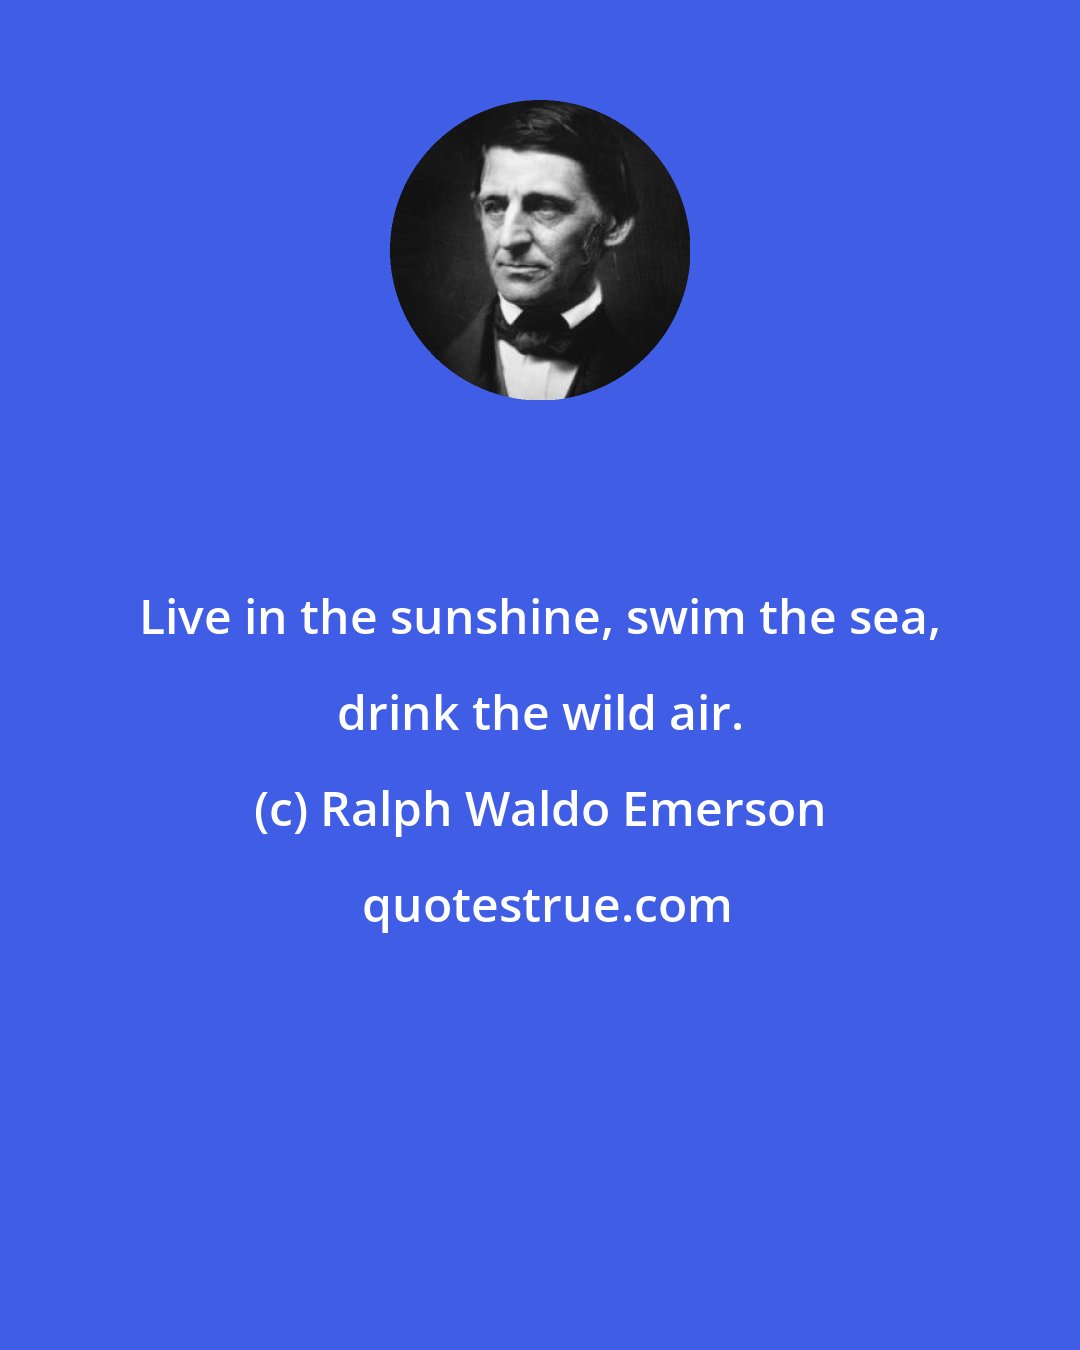 Ralph Waldo Emerson: Live in the sunshine, swim the sea, drink the wild air.